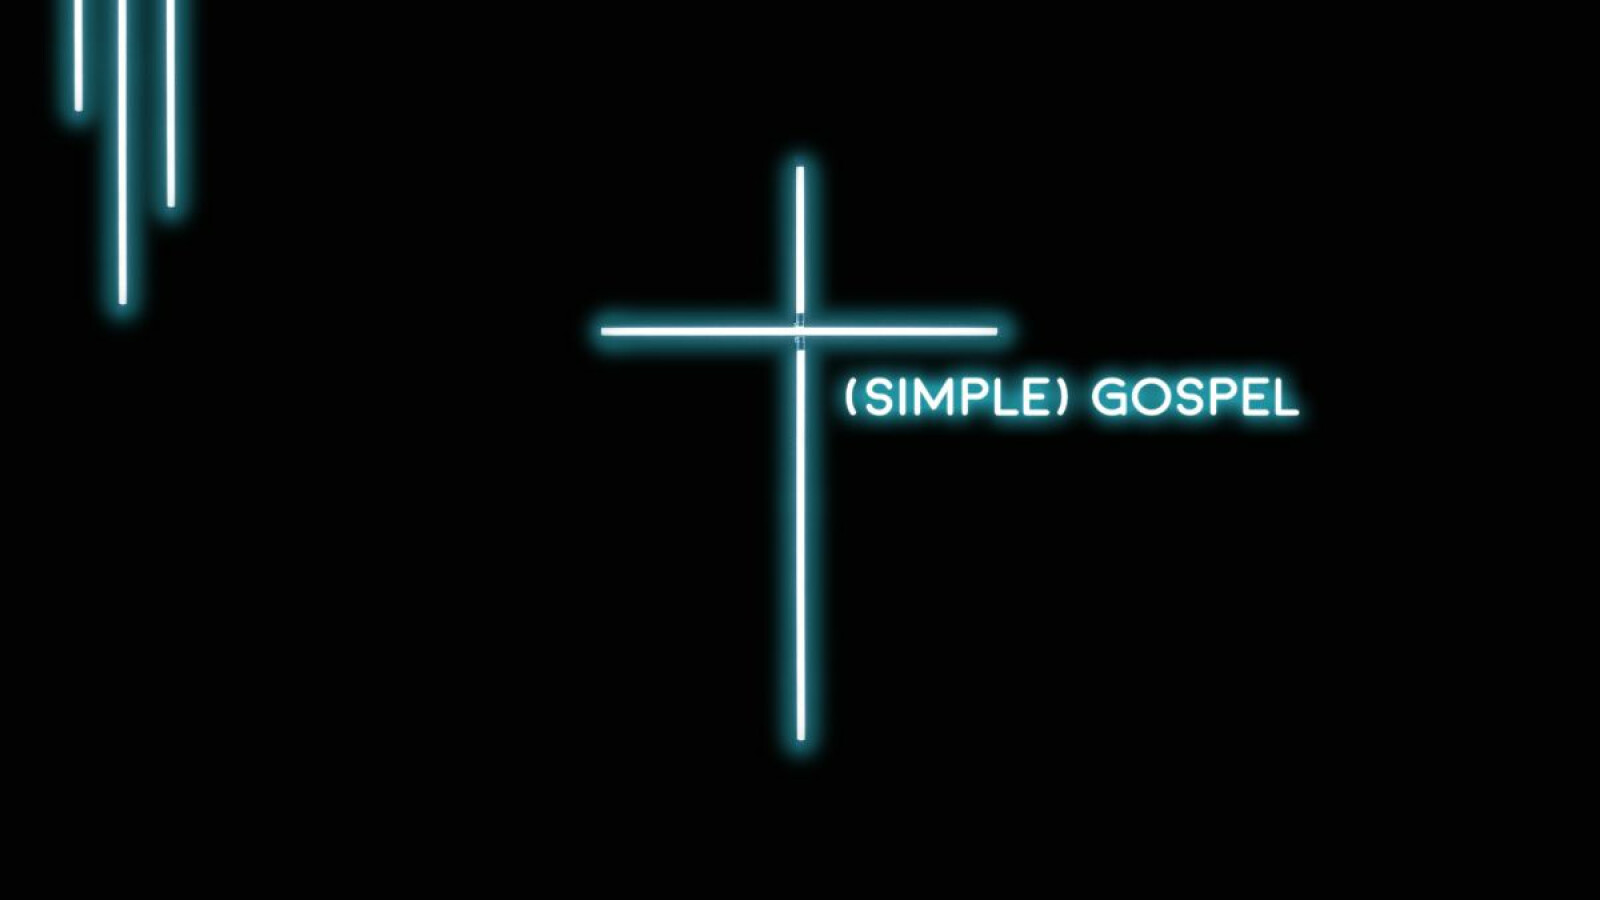 Simple Gospel